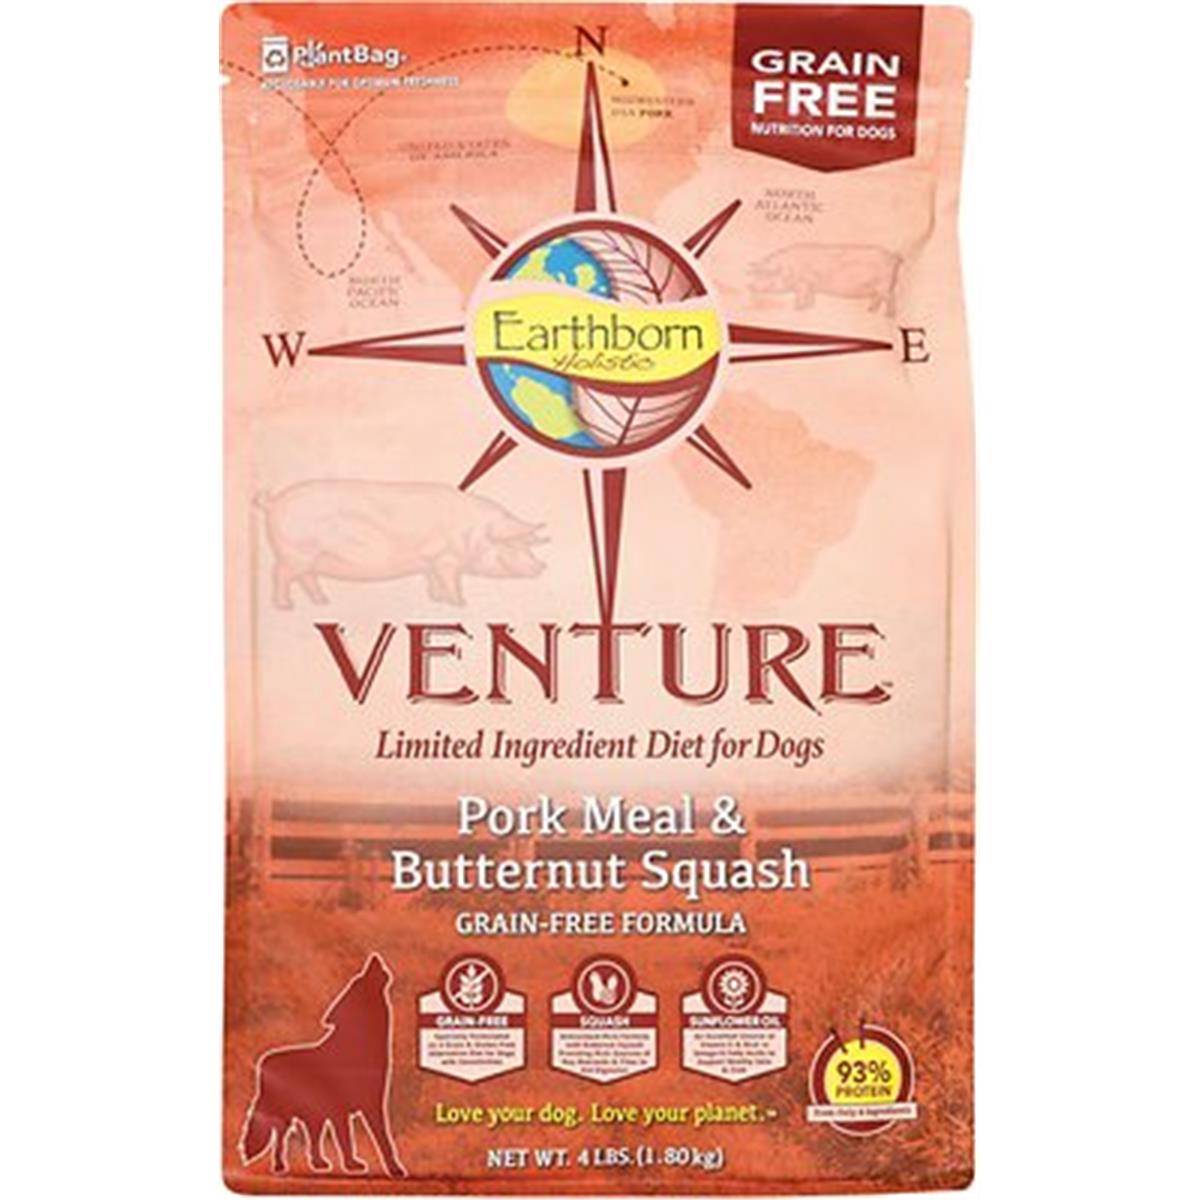 Pf57022 Venture Pork Meal & Butternut Squash Grain-free Dry Dog Food - 4 Lbs